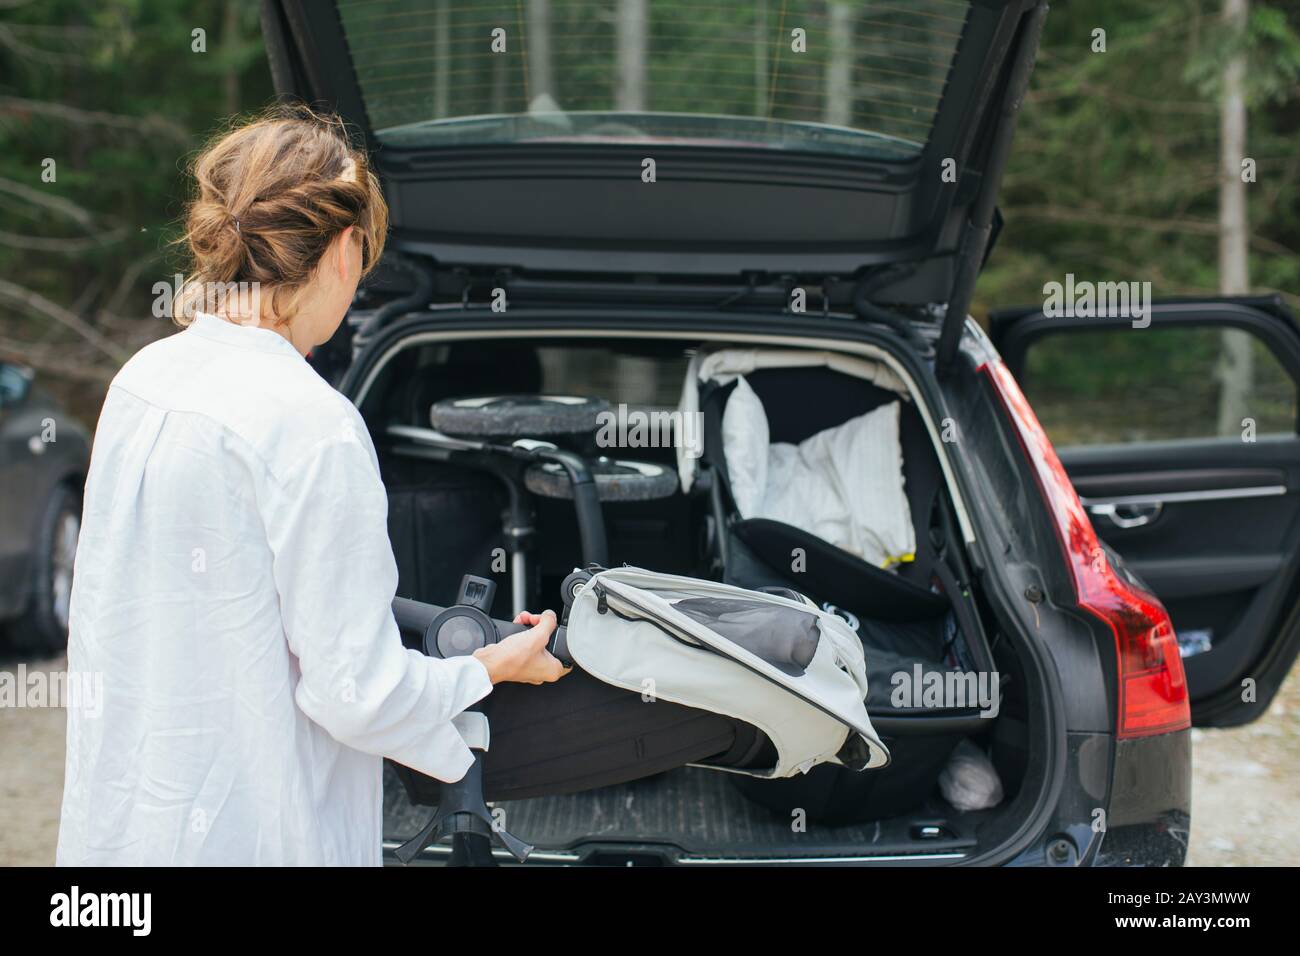 Woman loading pram into car boot Stock Photo